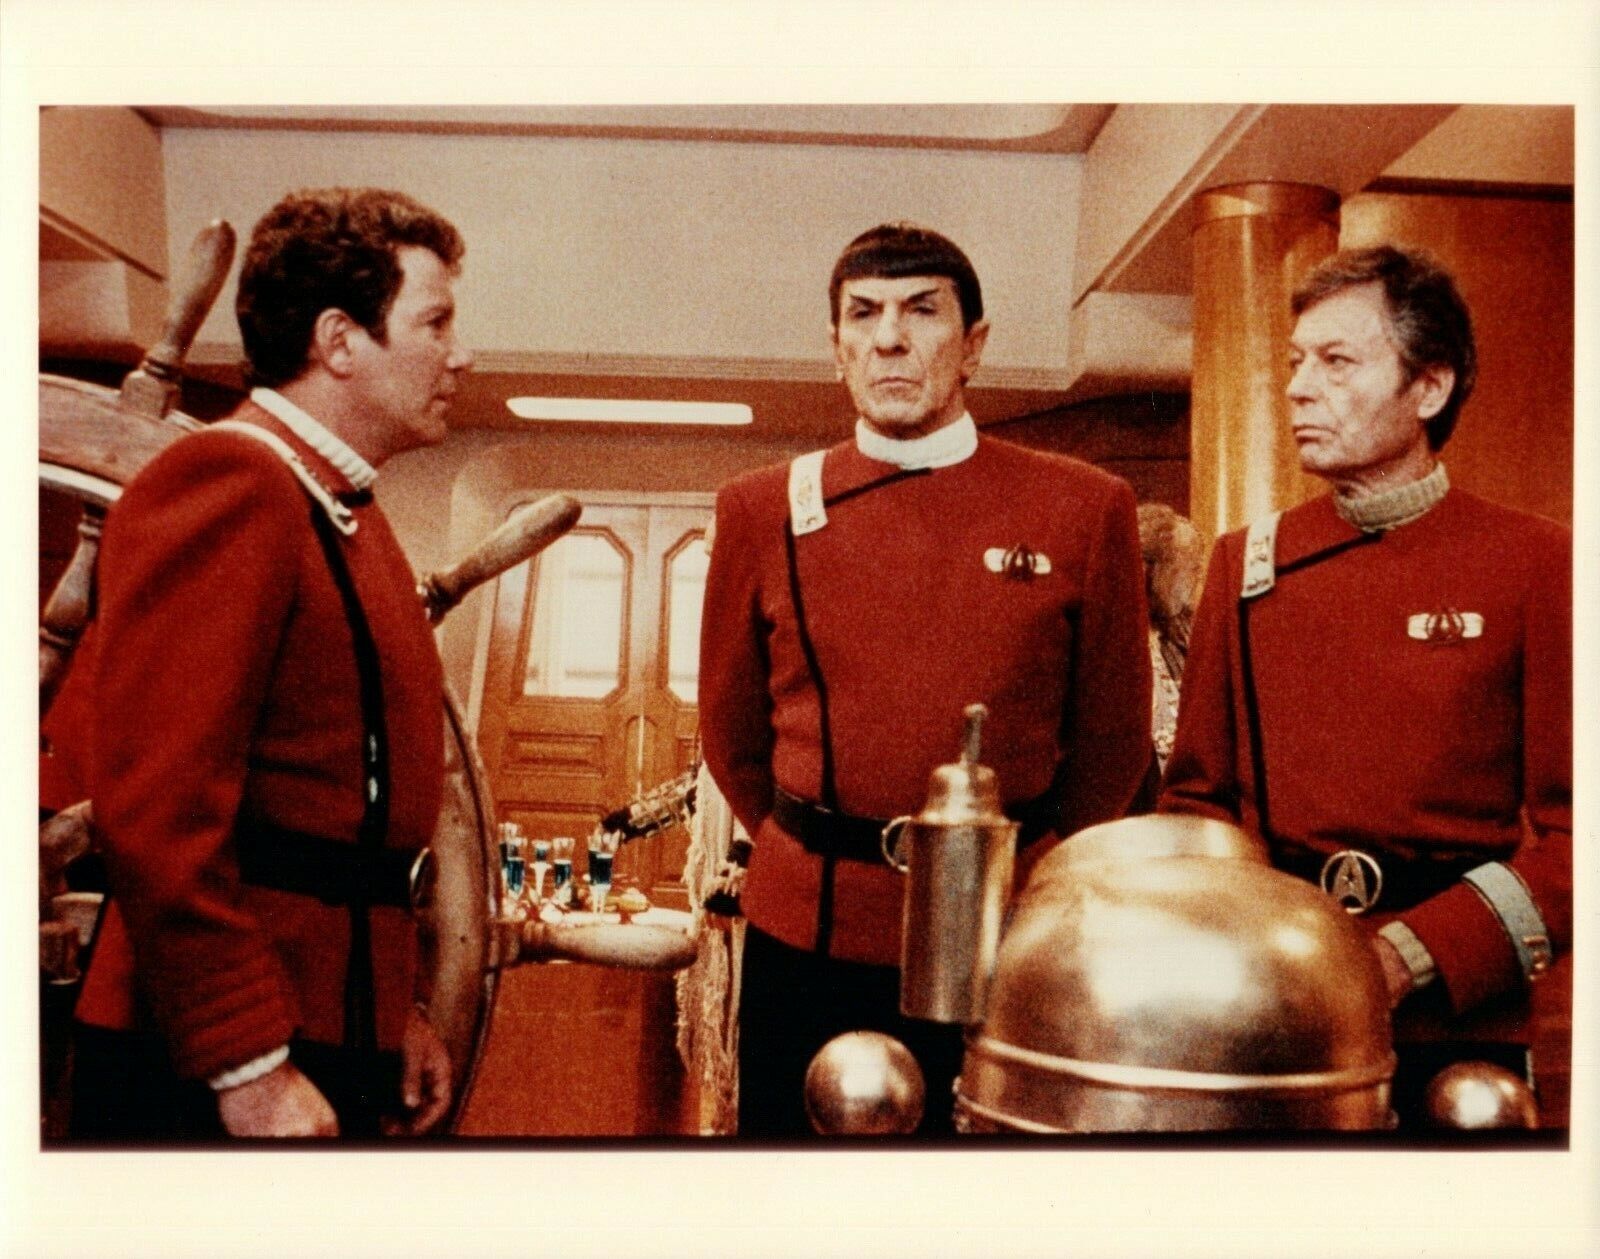 WILLIAM SHATNER LEONARD NIMOY Star Trek Original Series Vintage Photo Poster painting 8x10